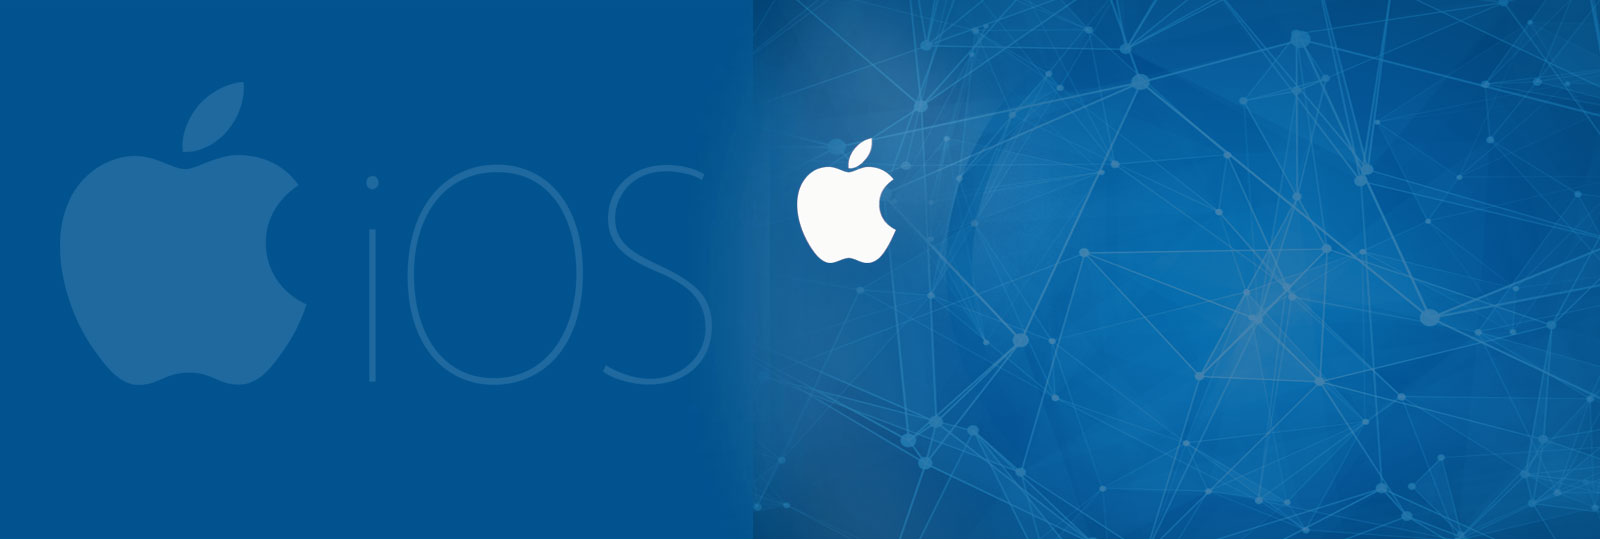 IOS App Development Company